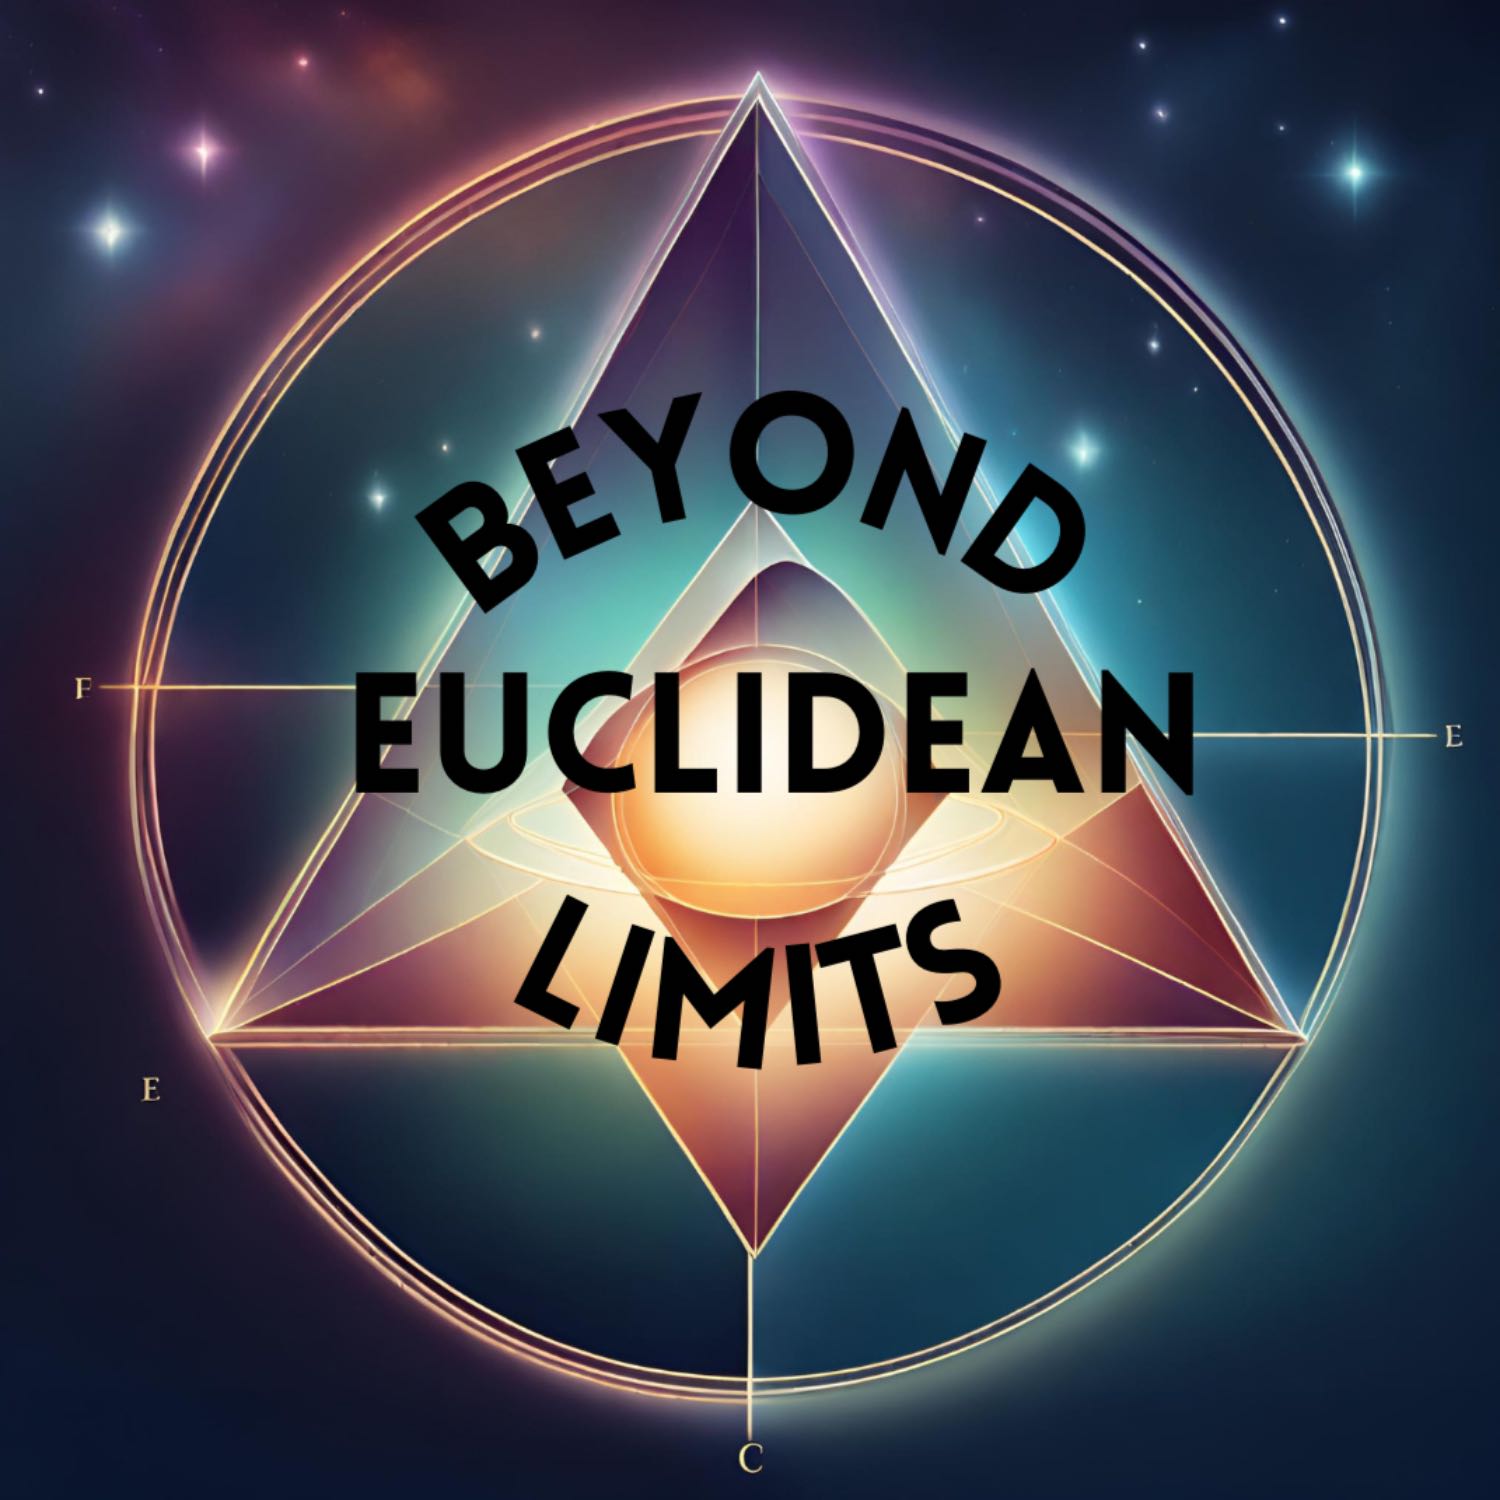 Beyond Euclidean Limits